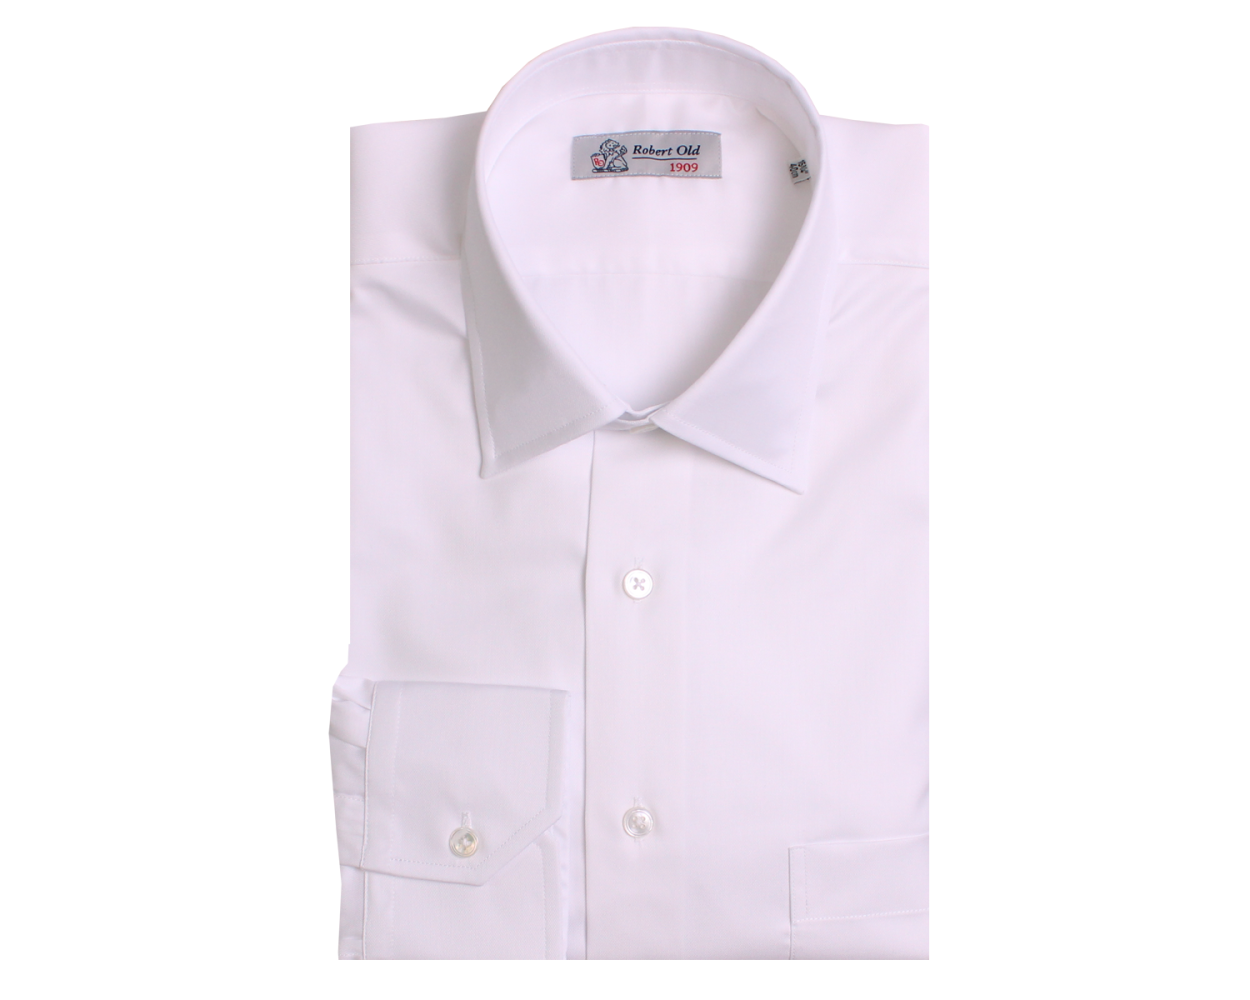 Robert Old White Twill Alumo Swiss Genio Cotton Shirt